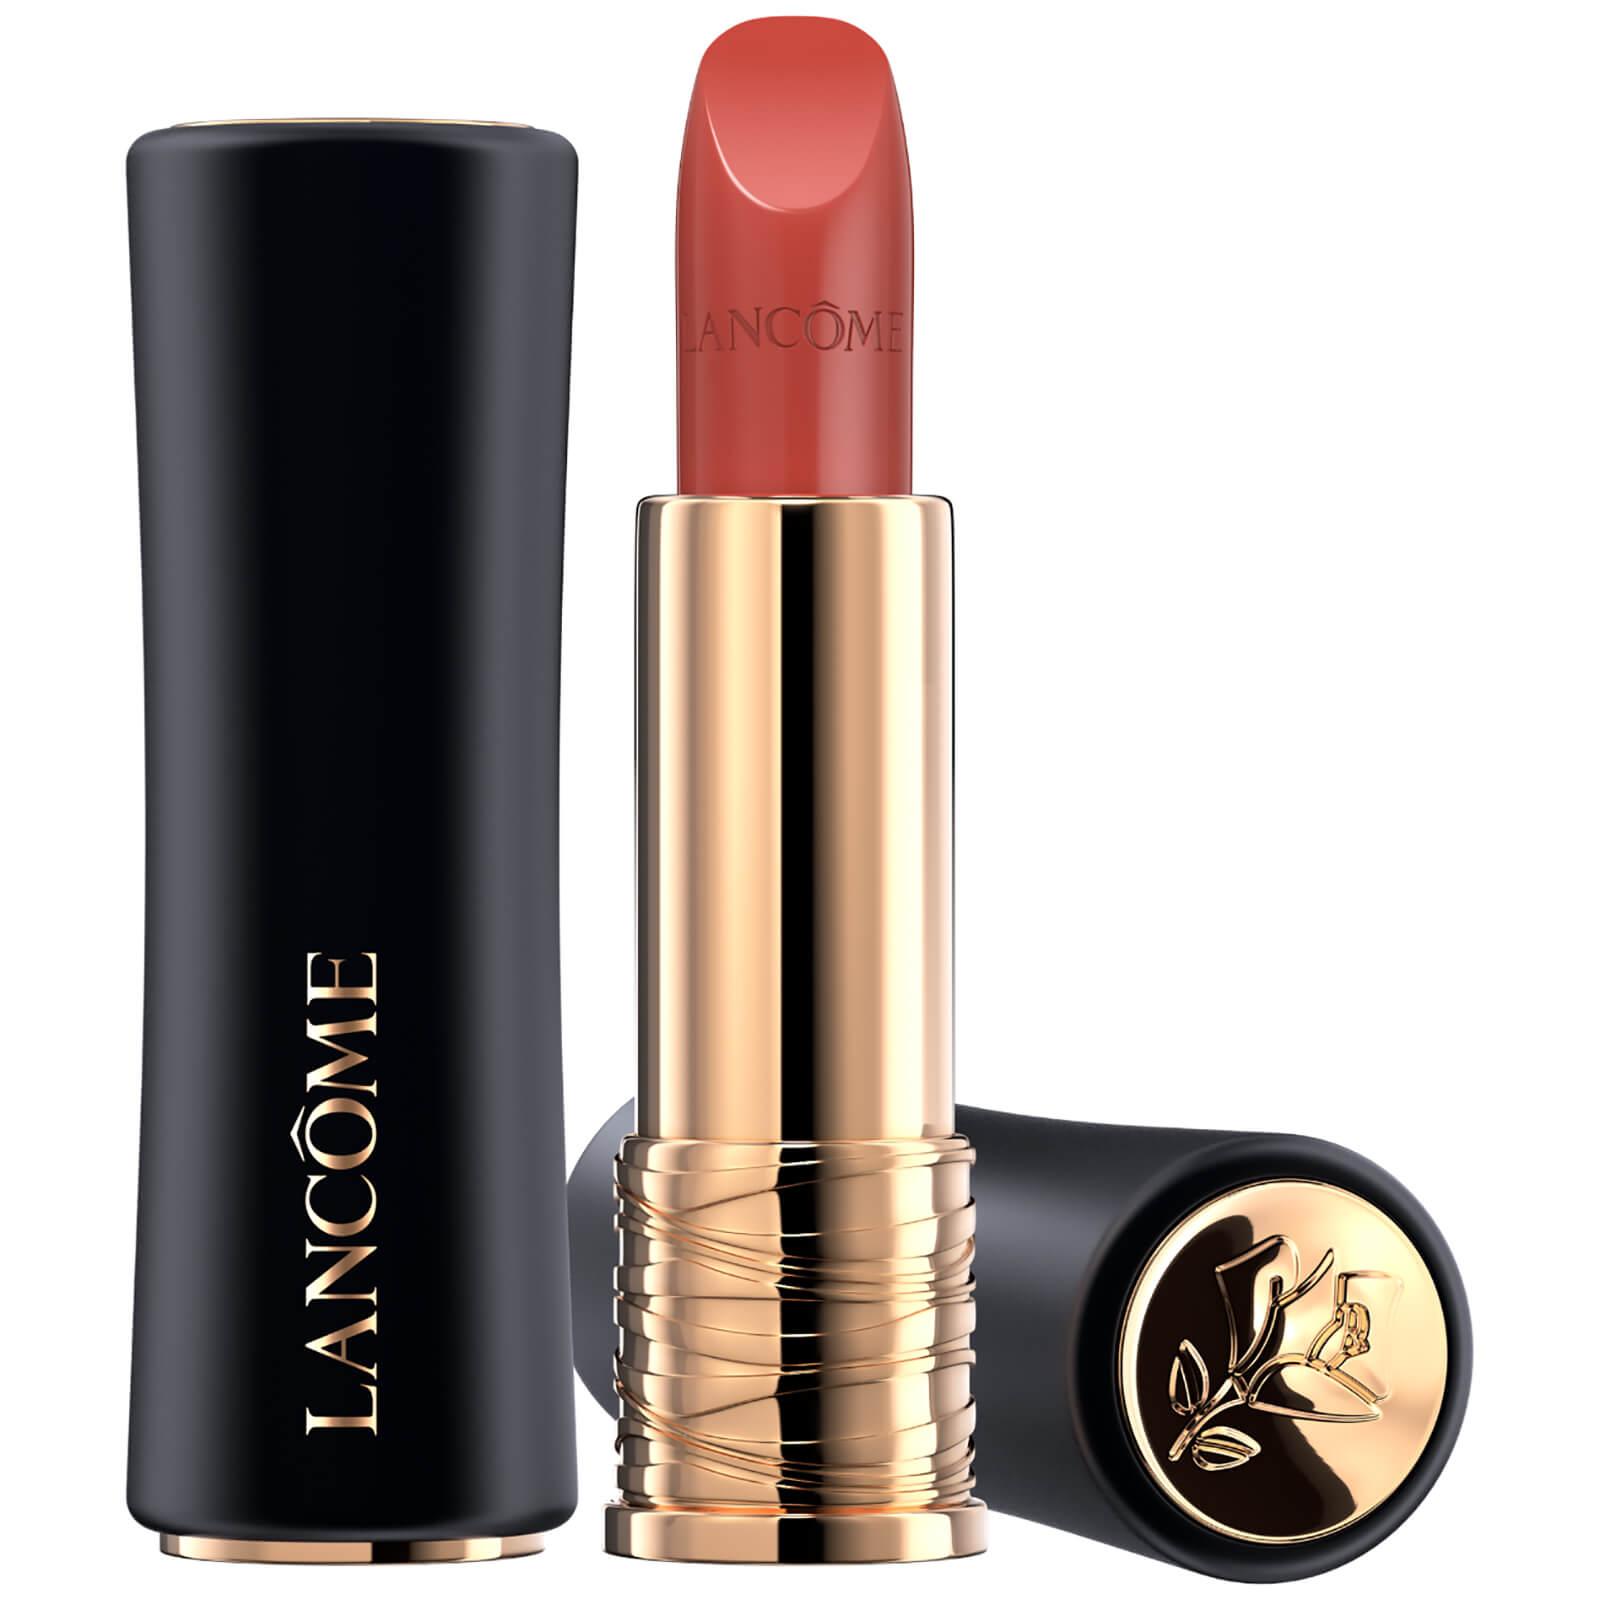 Lancôme L'Absolu Rouge Cream Lipstick 35ml (Verschiedene Farbtöne) - 11 Rose Nature